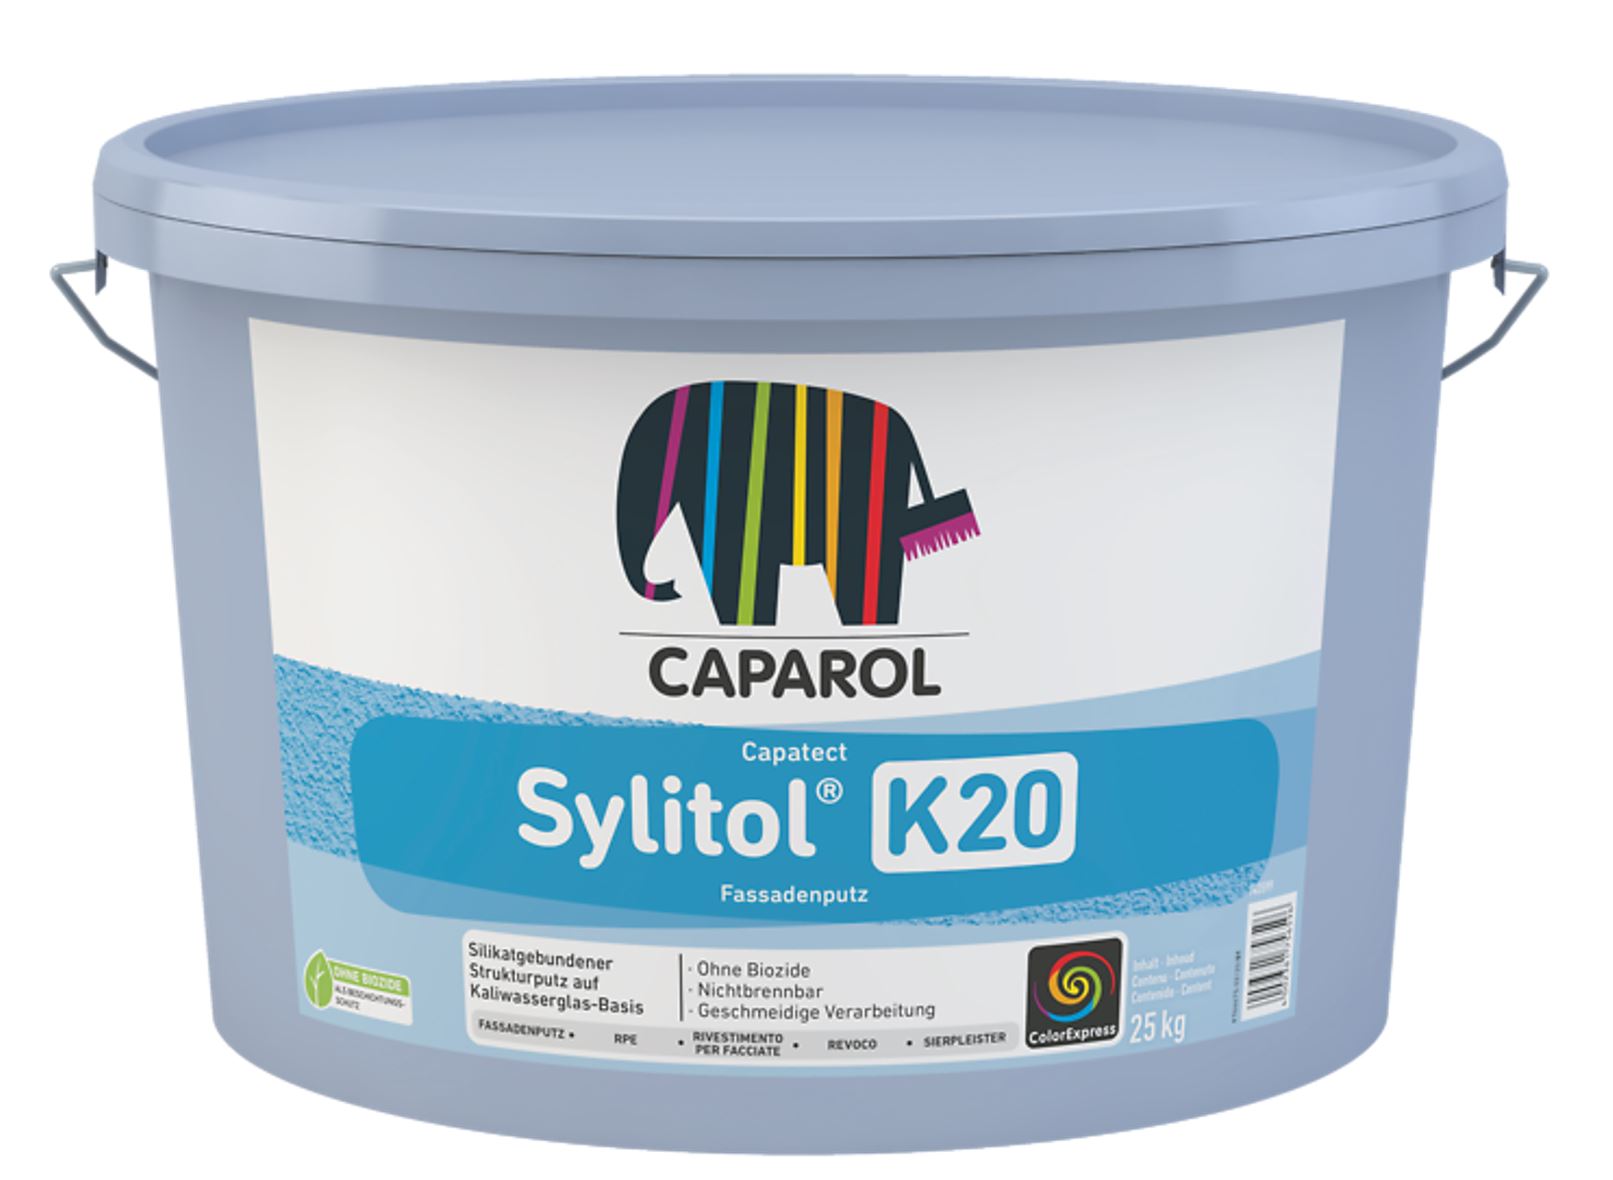 Caparol Capatect Sylitol Fassadenputz, Wunschfarbton, 25 kg